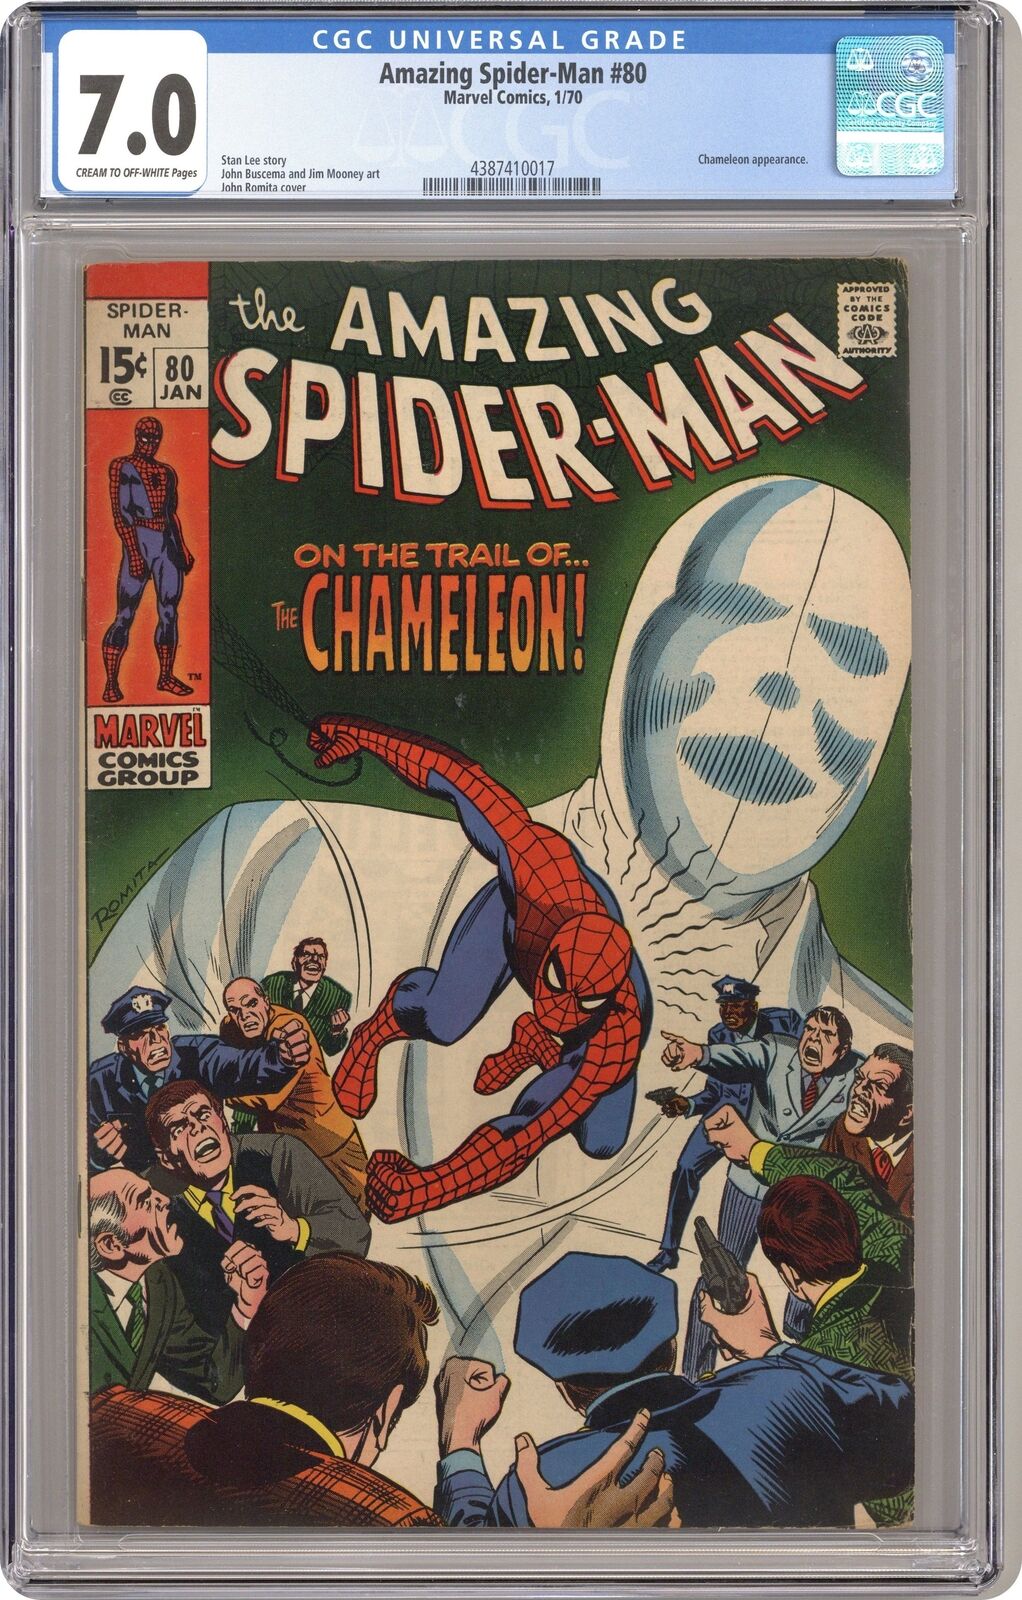 Amazing Spider-Man #80 CGC 7.0 1970 4387410017